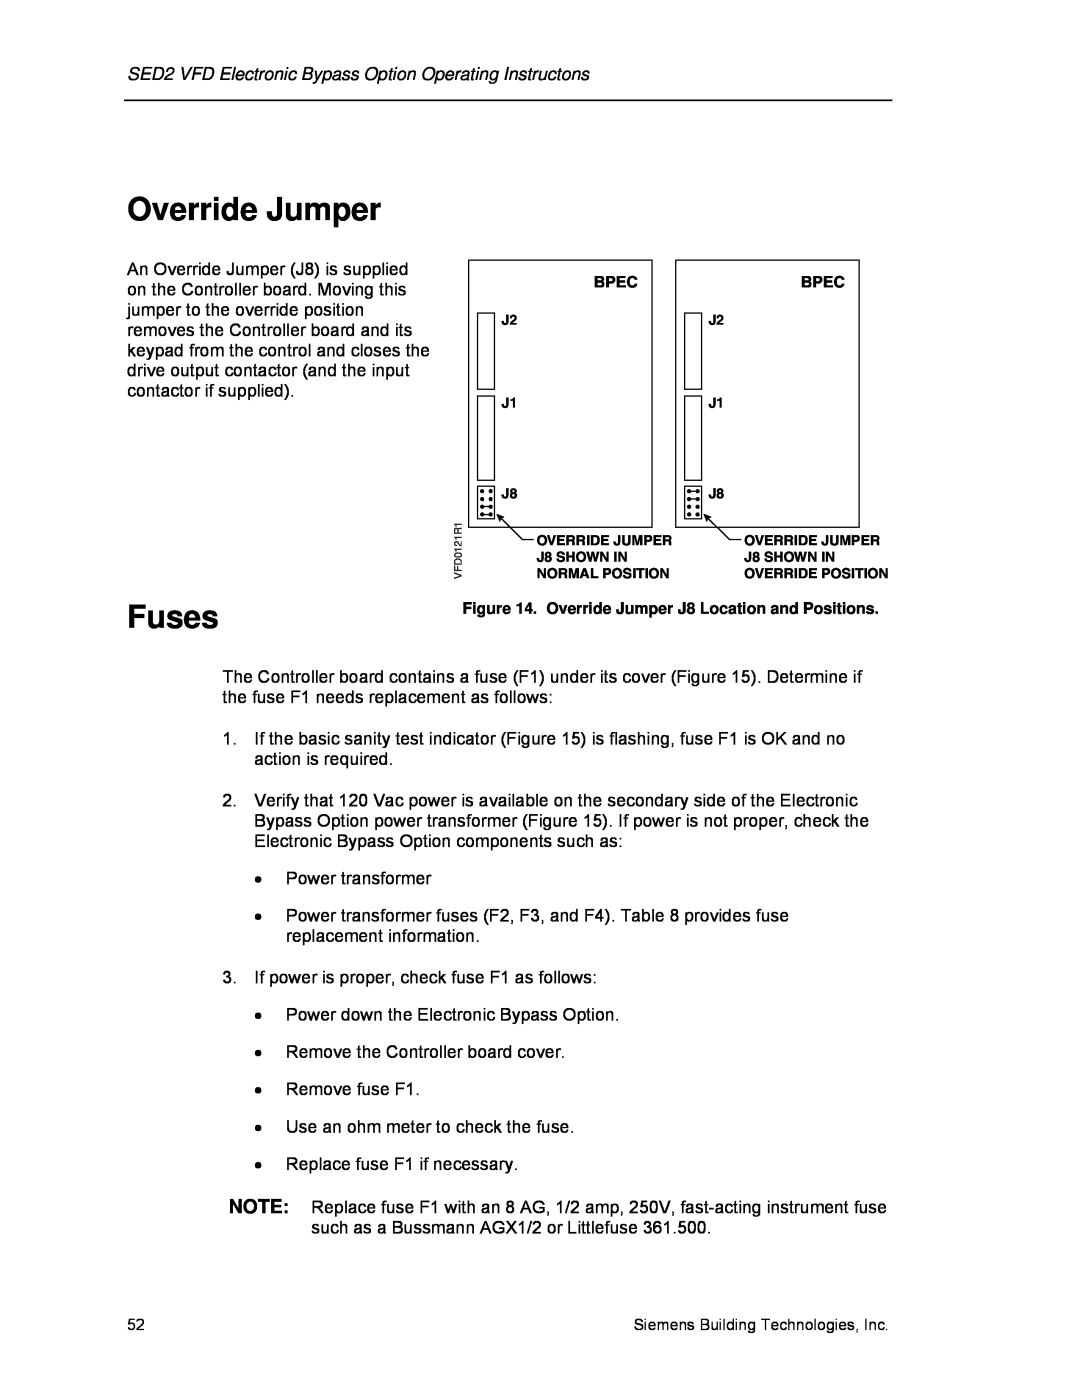 Siemens 125-3208 operating instructions Override Jumper, Fuses 